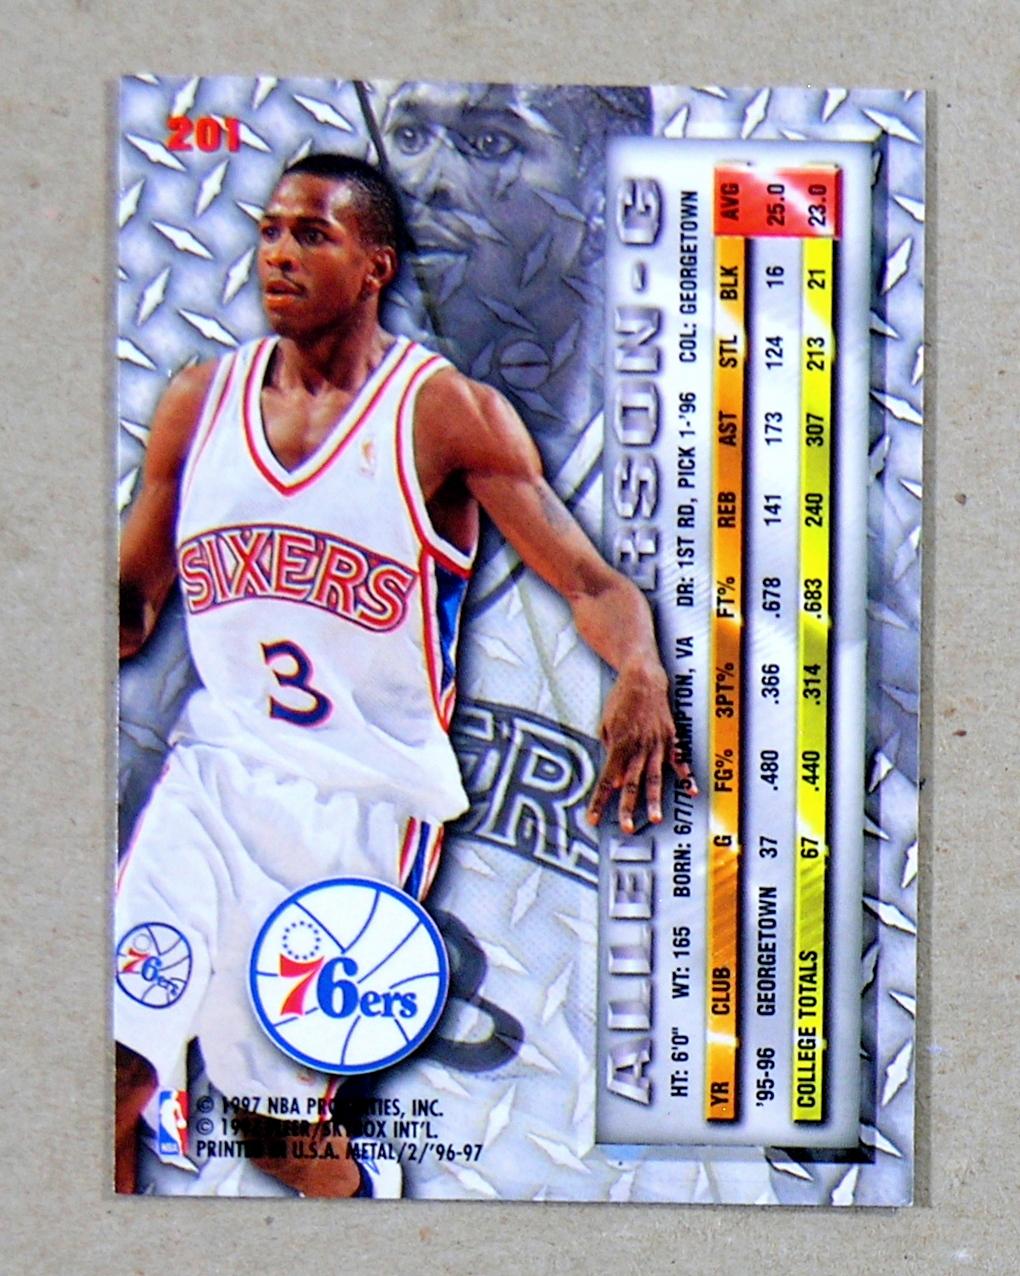 1997 Sky box "Metal" ROOKIE Basketball Card #201 Rookie Allen Iverson Phila